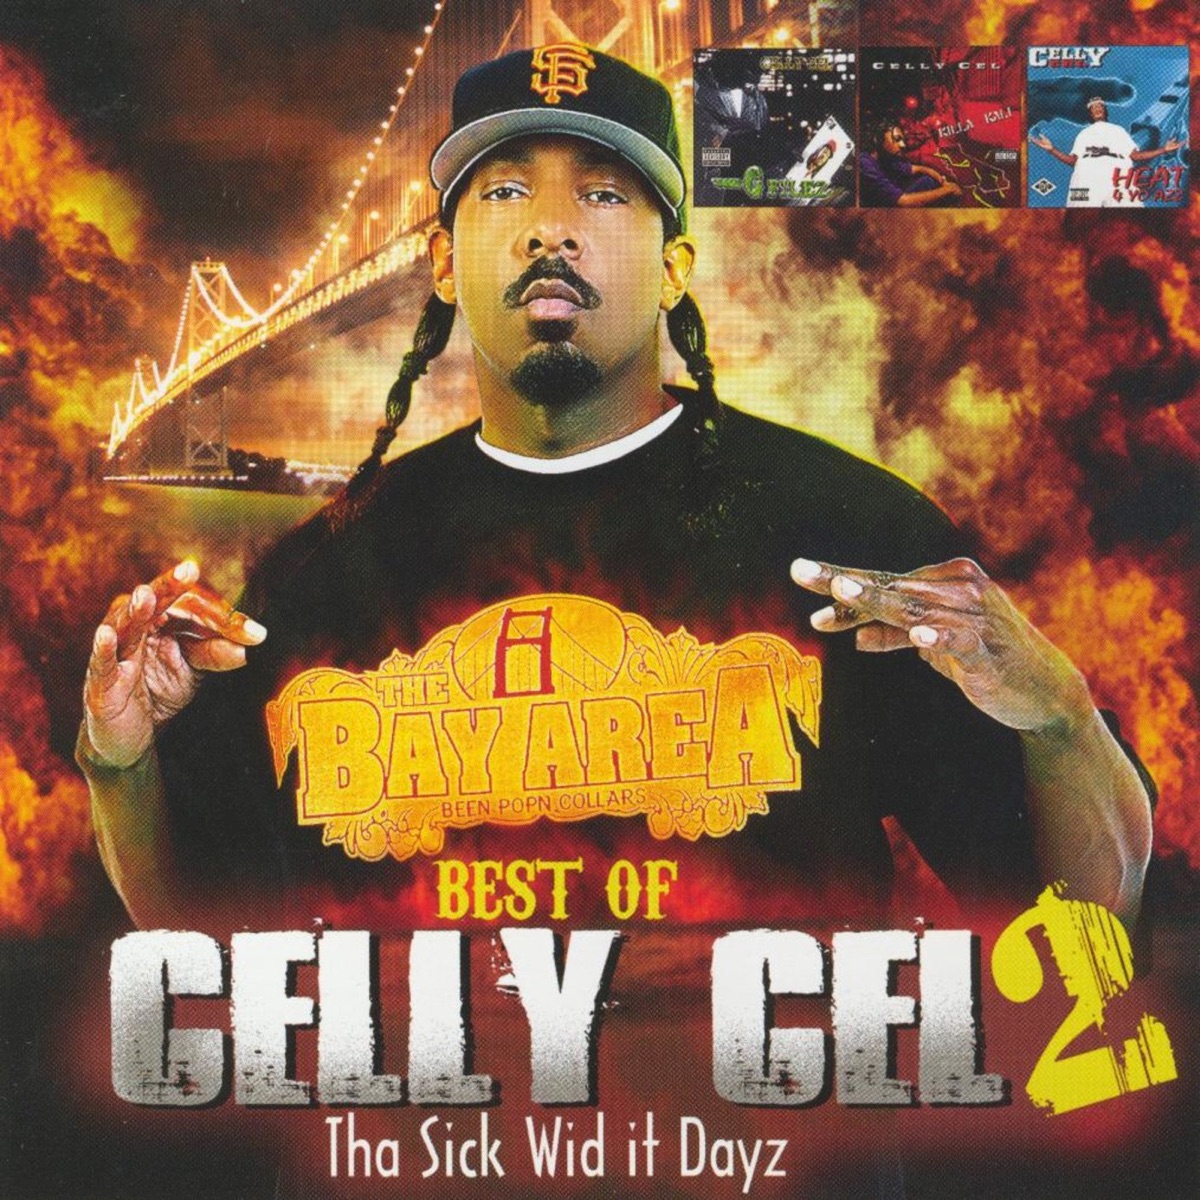 Best of Celly Cel 2: Tha Sick Wid It Dayz - Album by Celly Cel